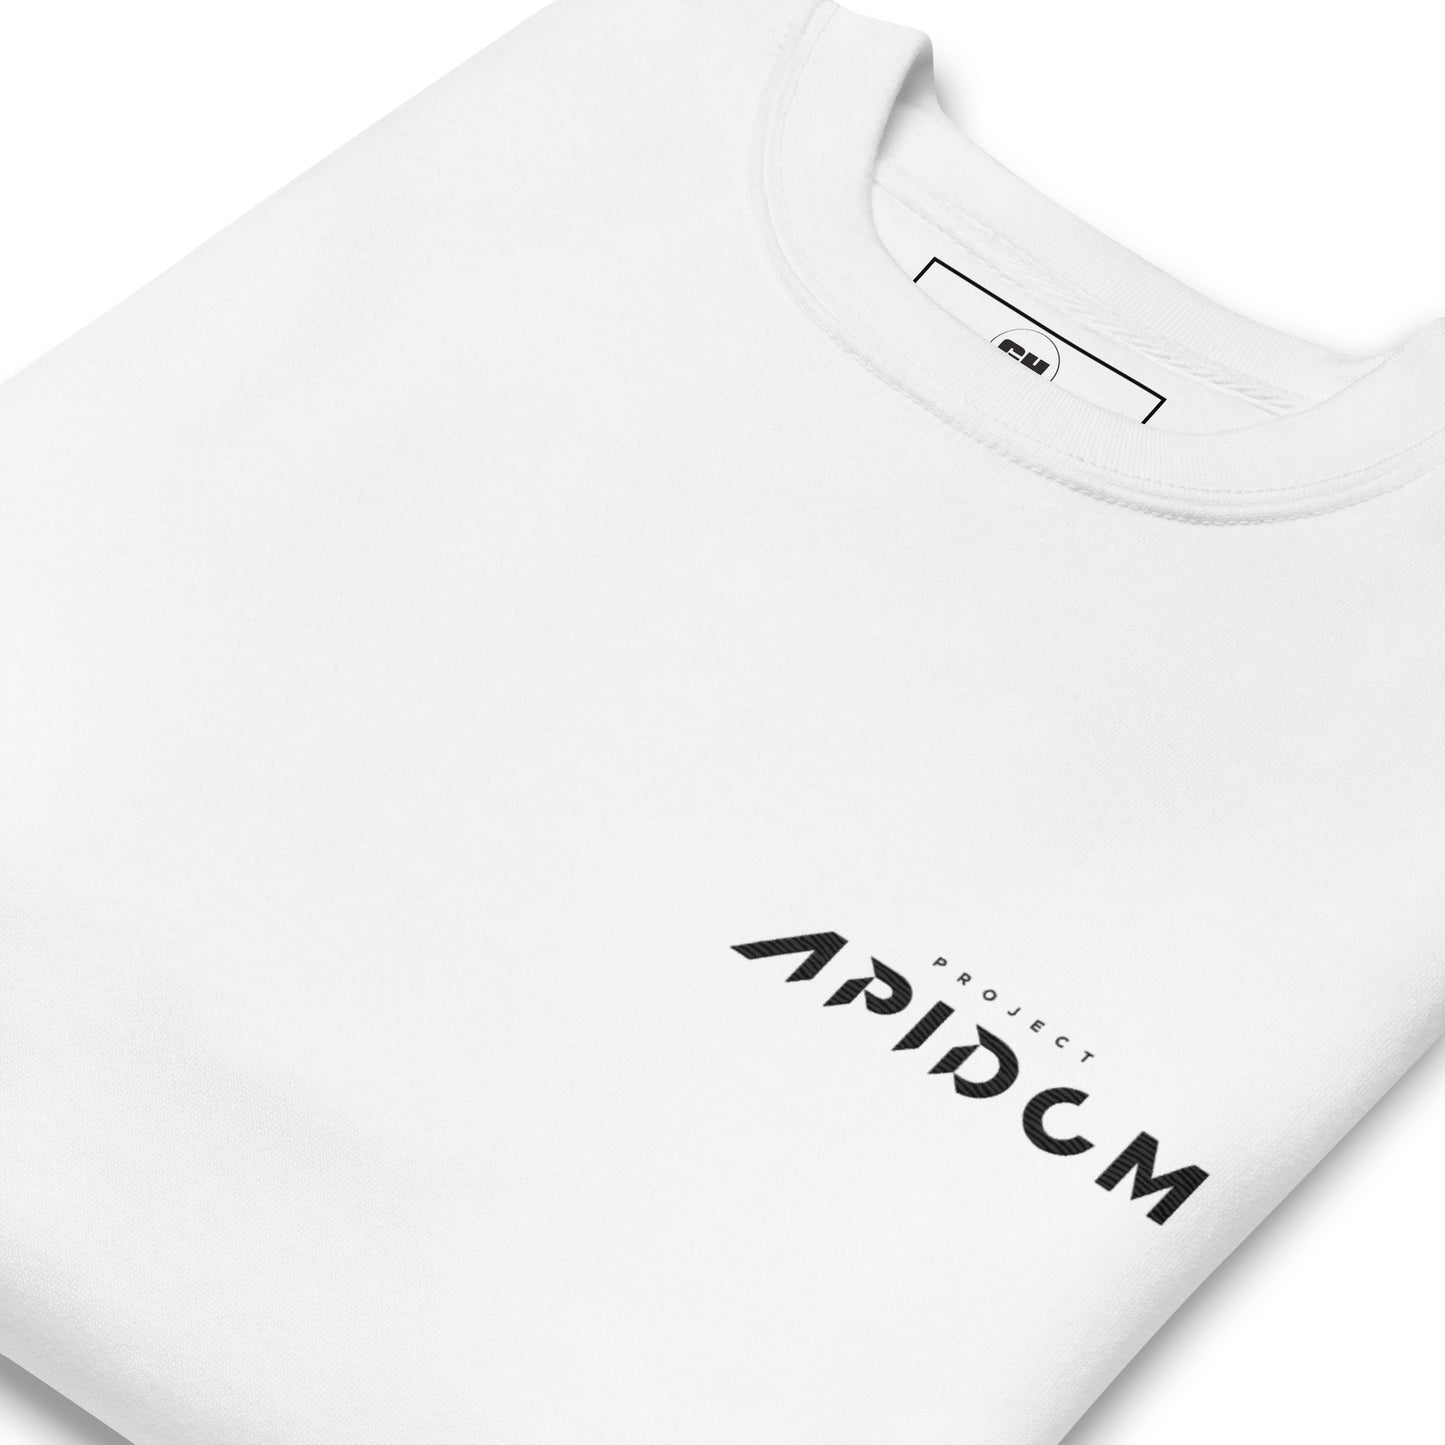 Project_Apidom_2_Unisex Premium Sweatshirt